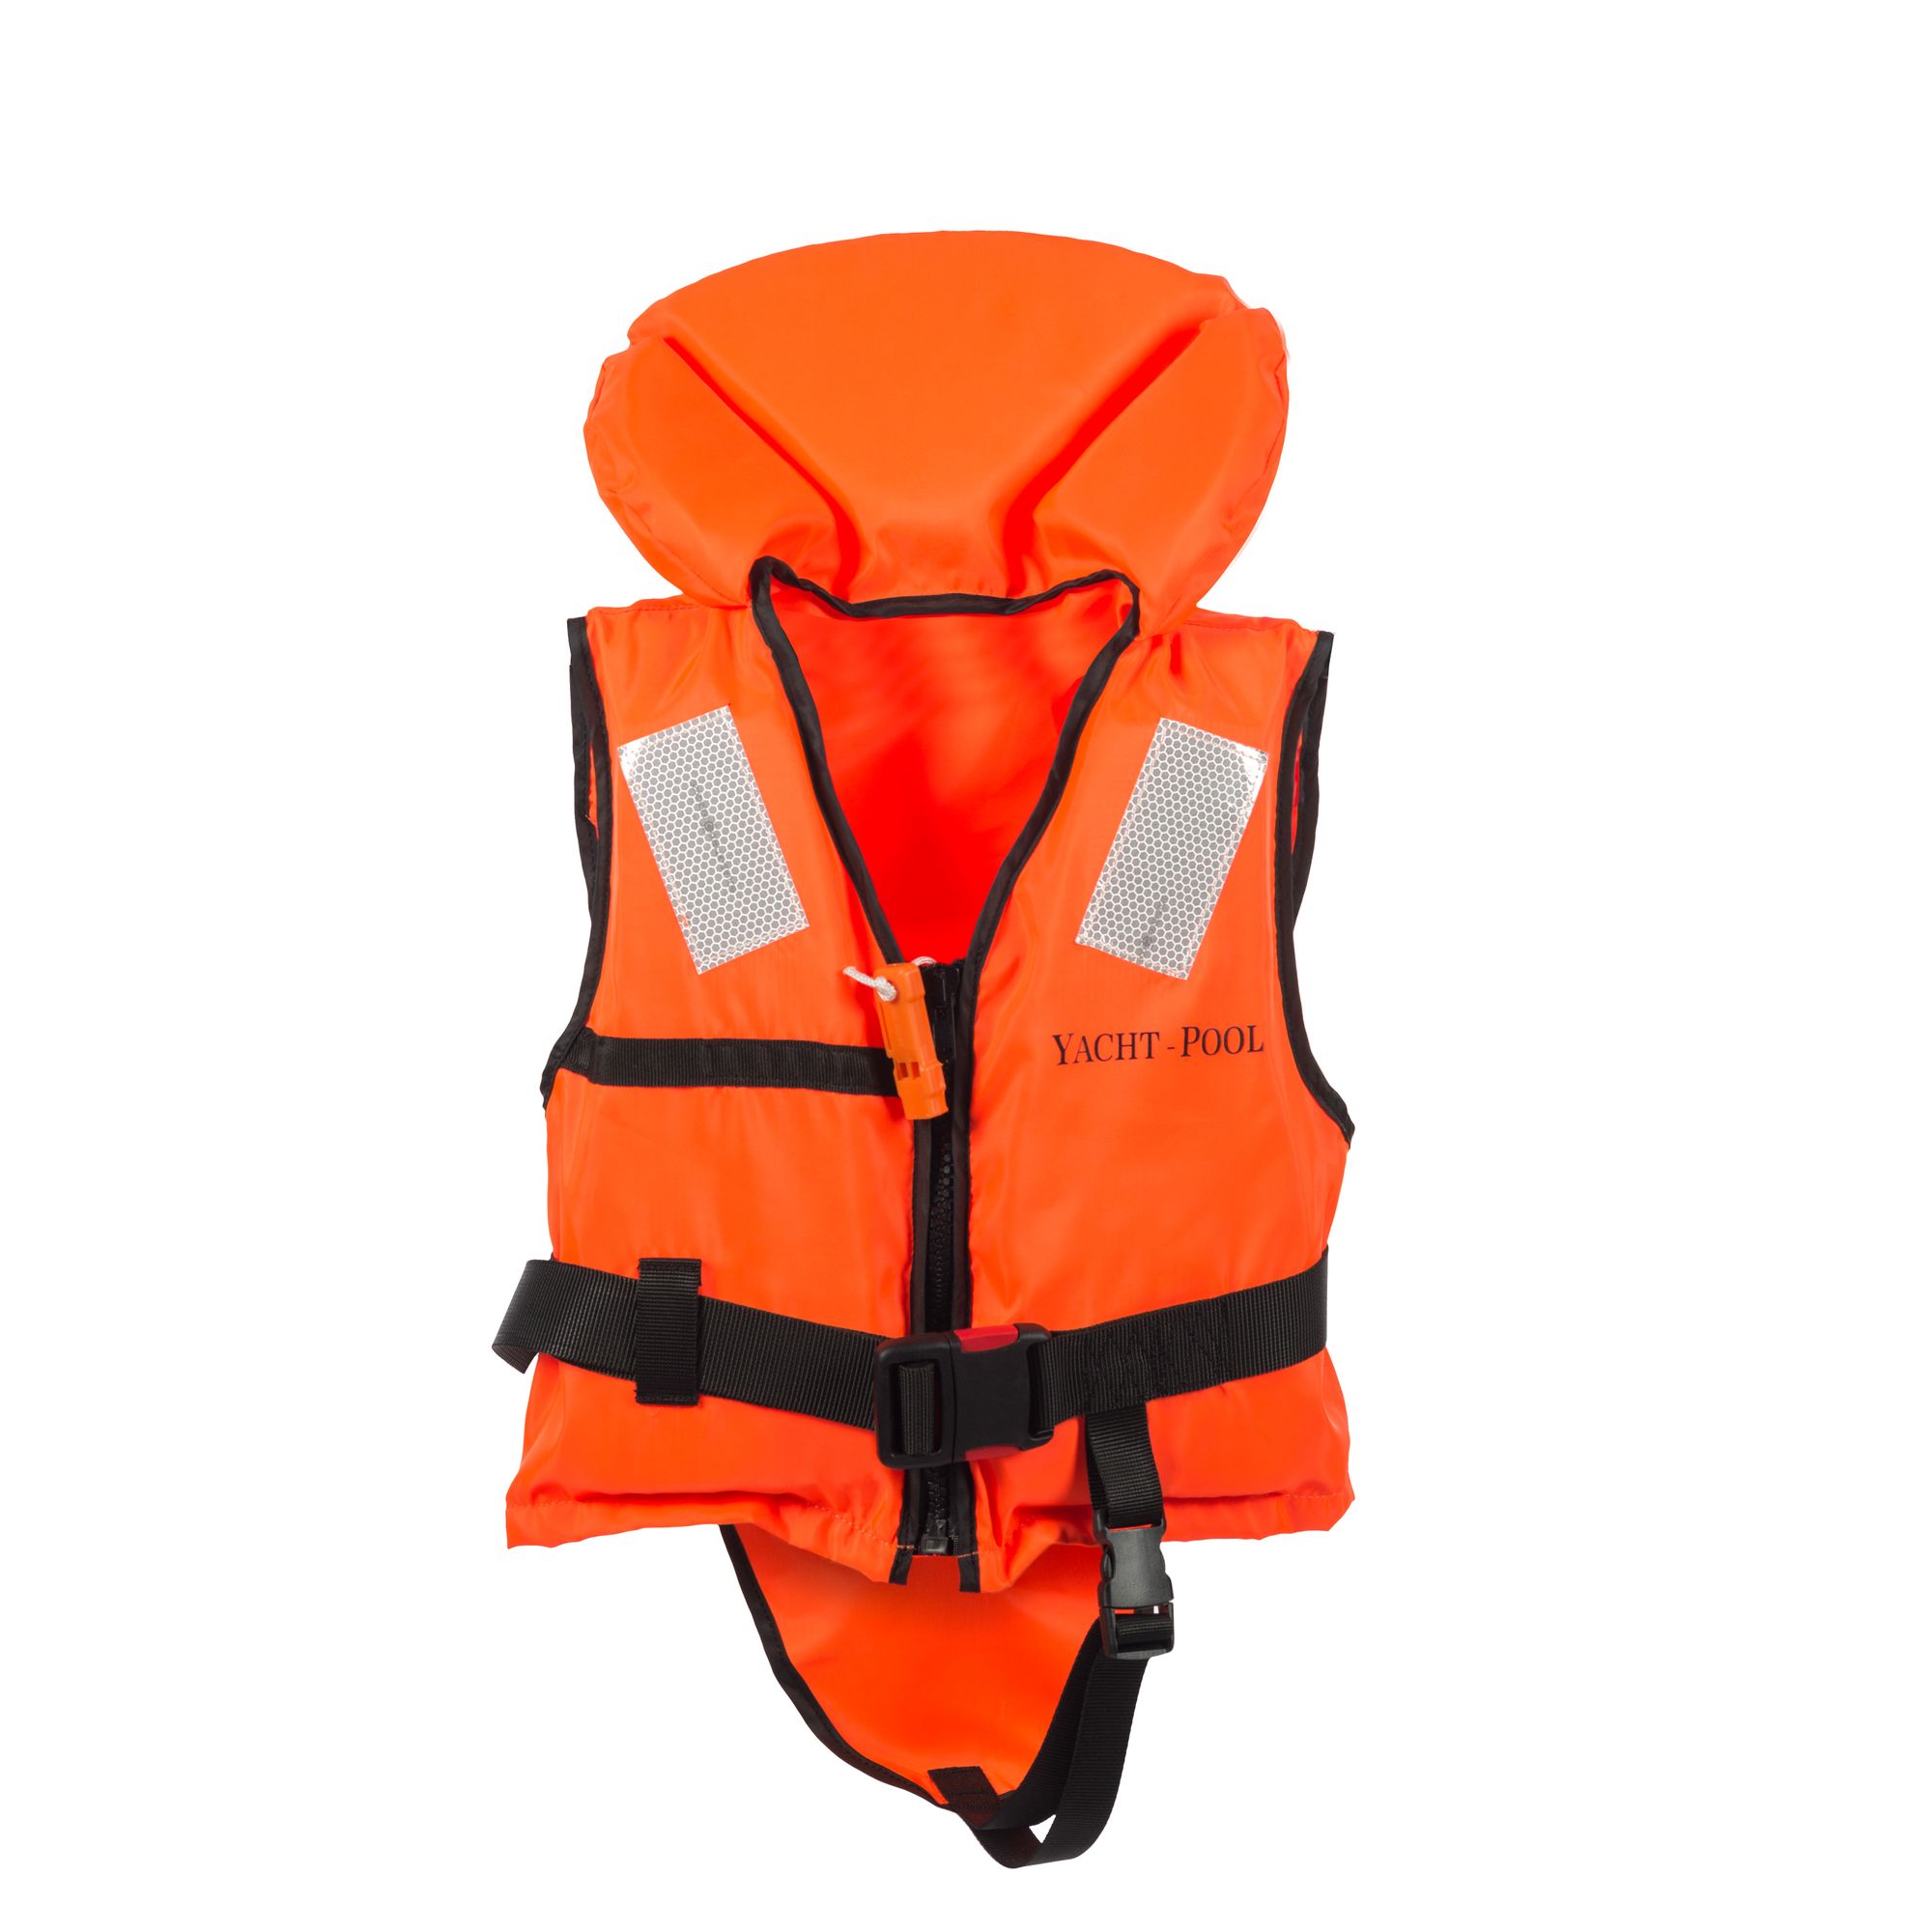 YACHT-POOL life jacket 100 N